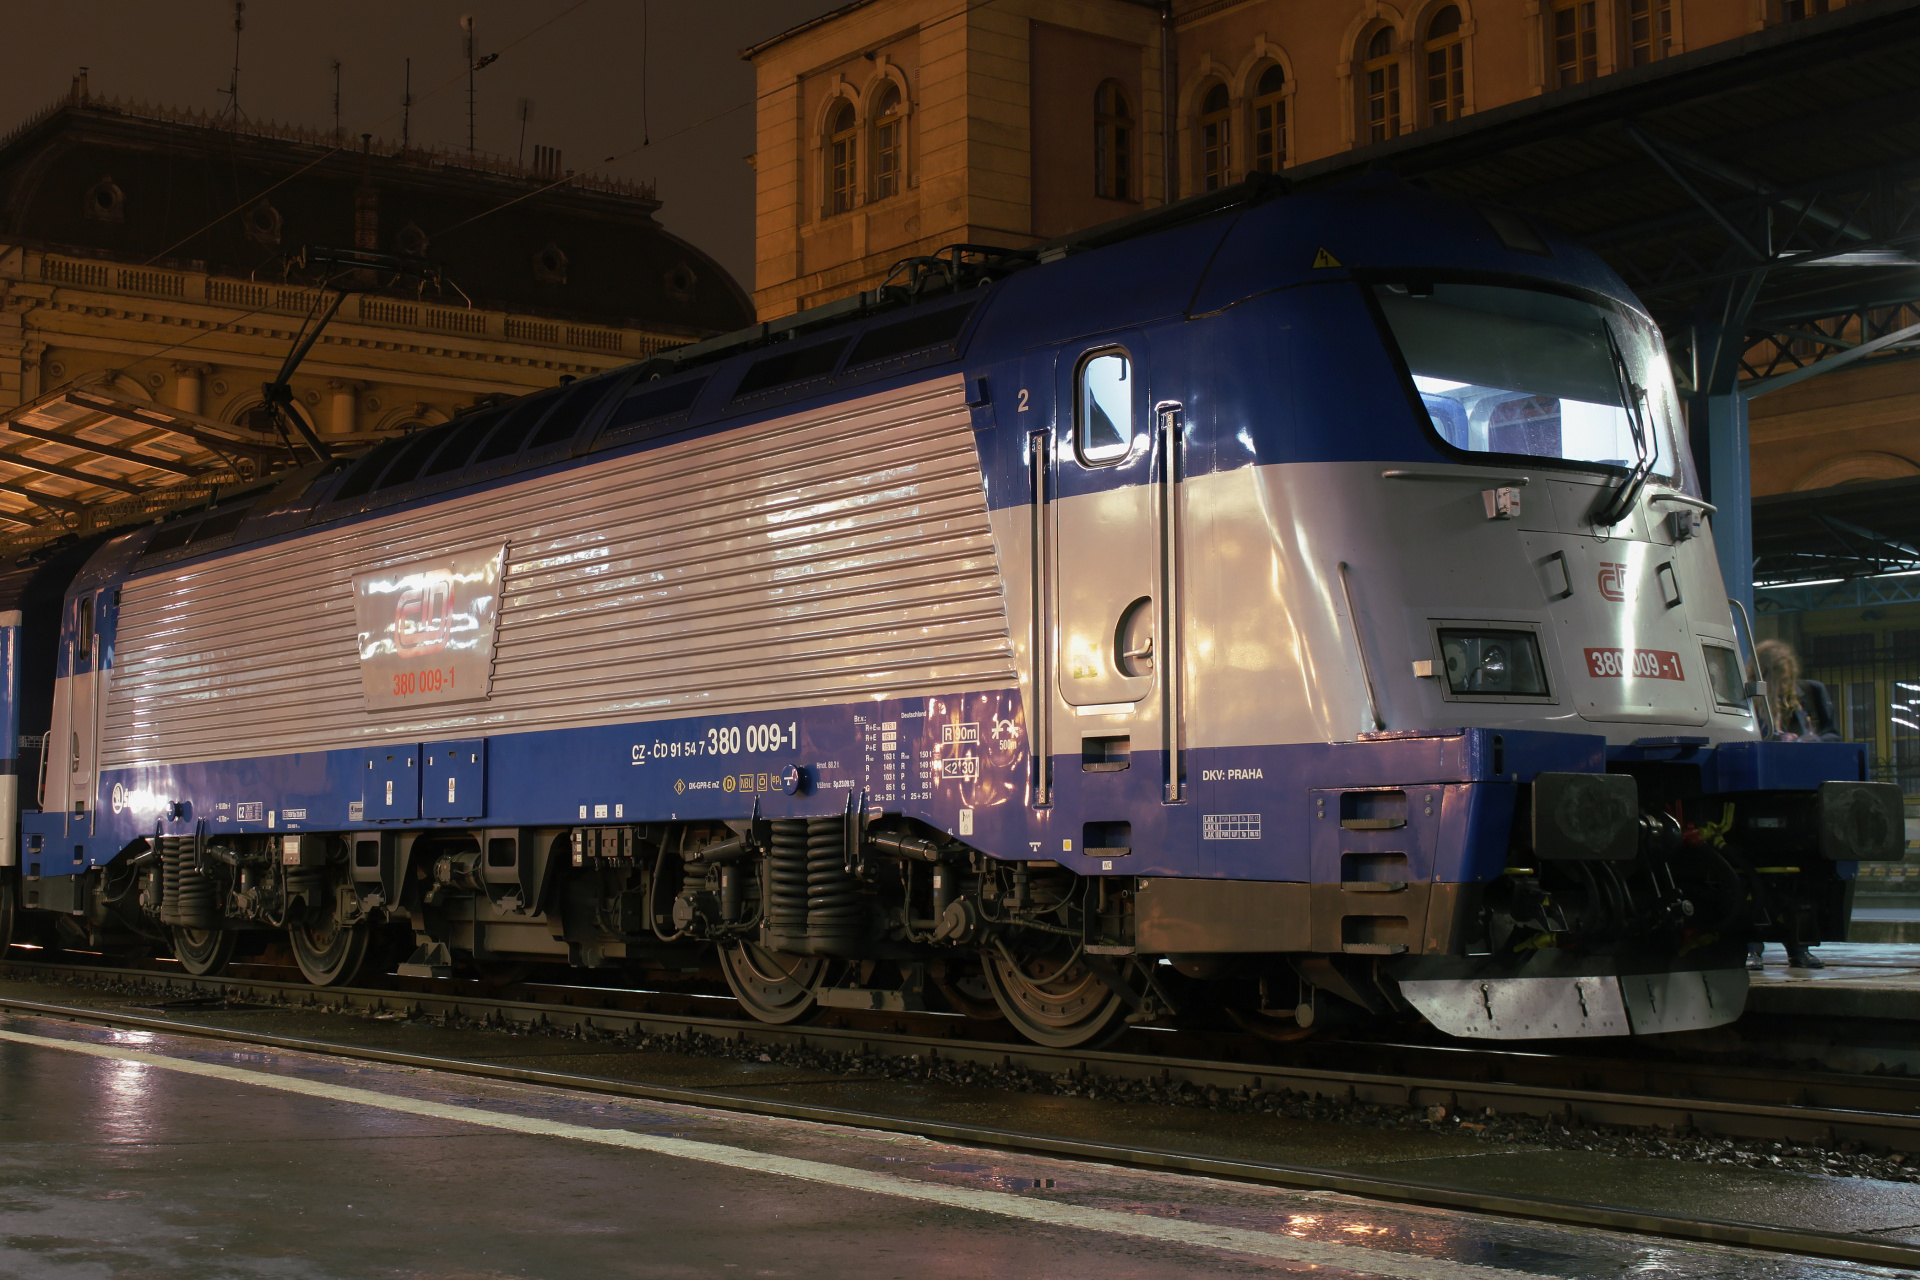 Škoda 109E 380 009-1 (Travels » Budapest » Vehicles » Trains and Locomotives)